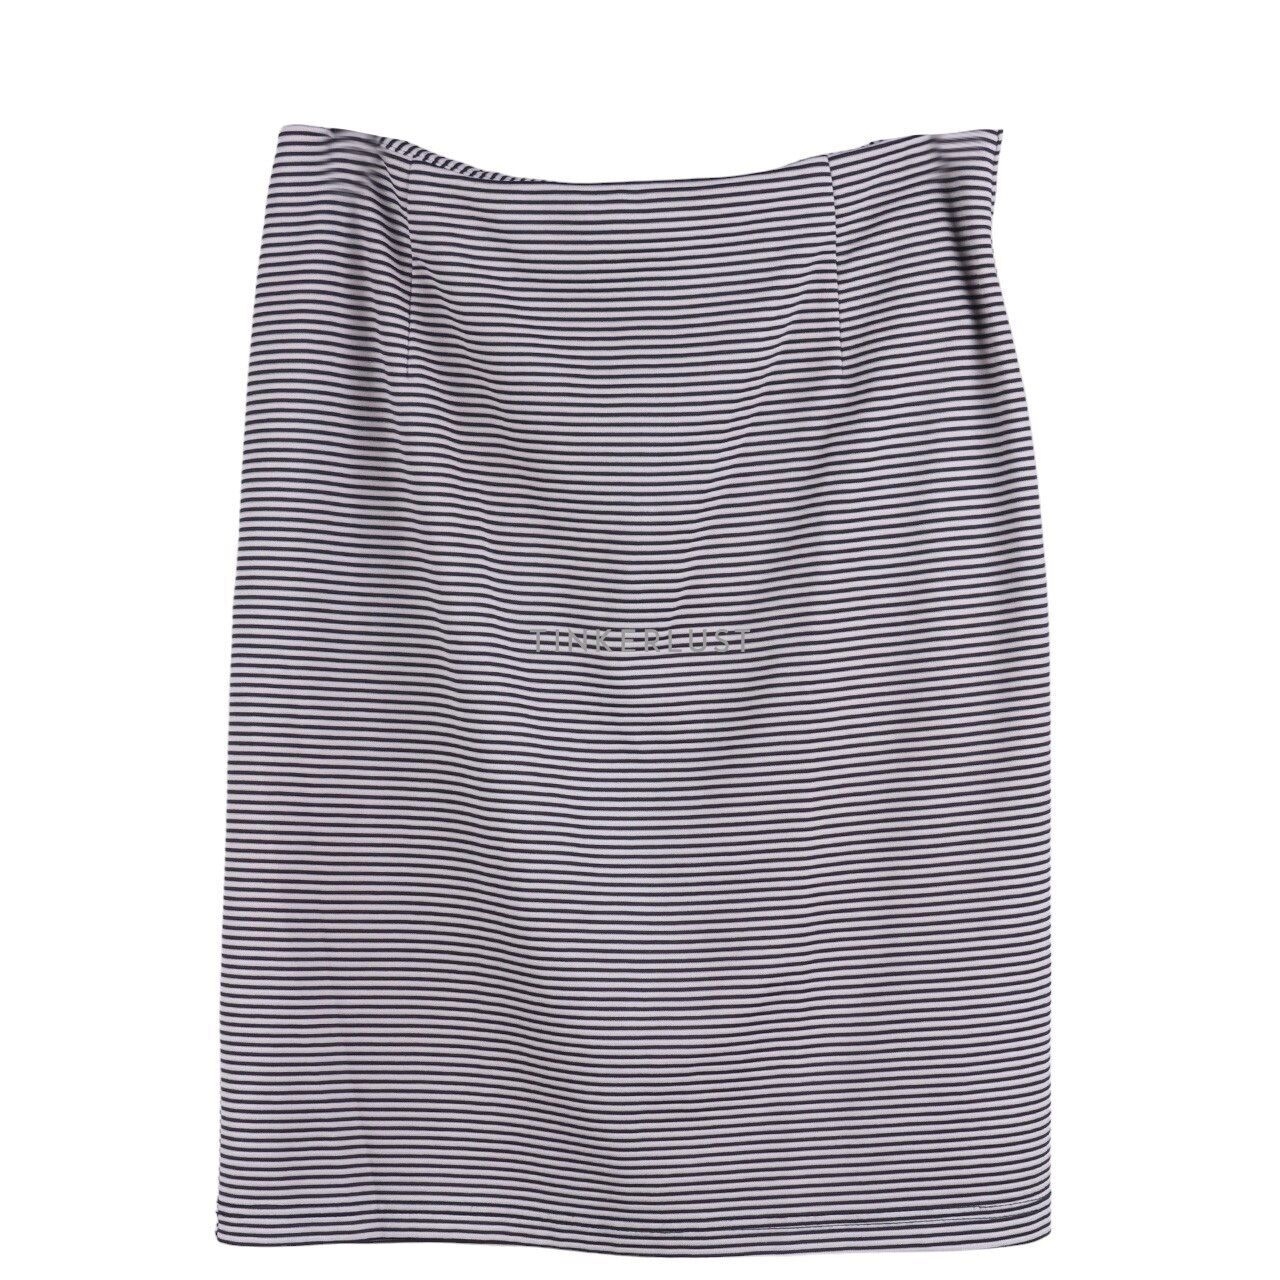 The Executive Black & White Stripes Mini Skirt